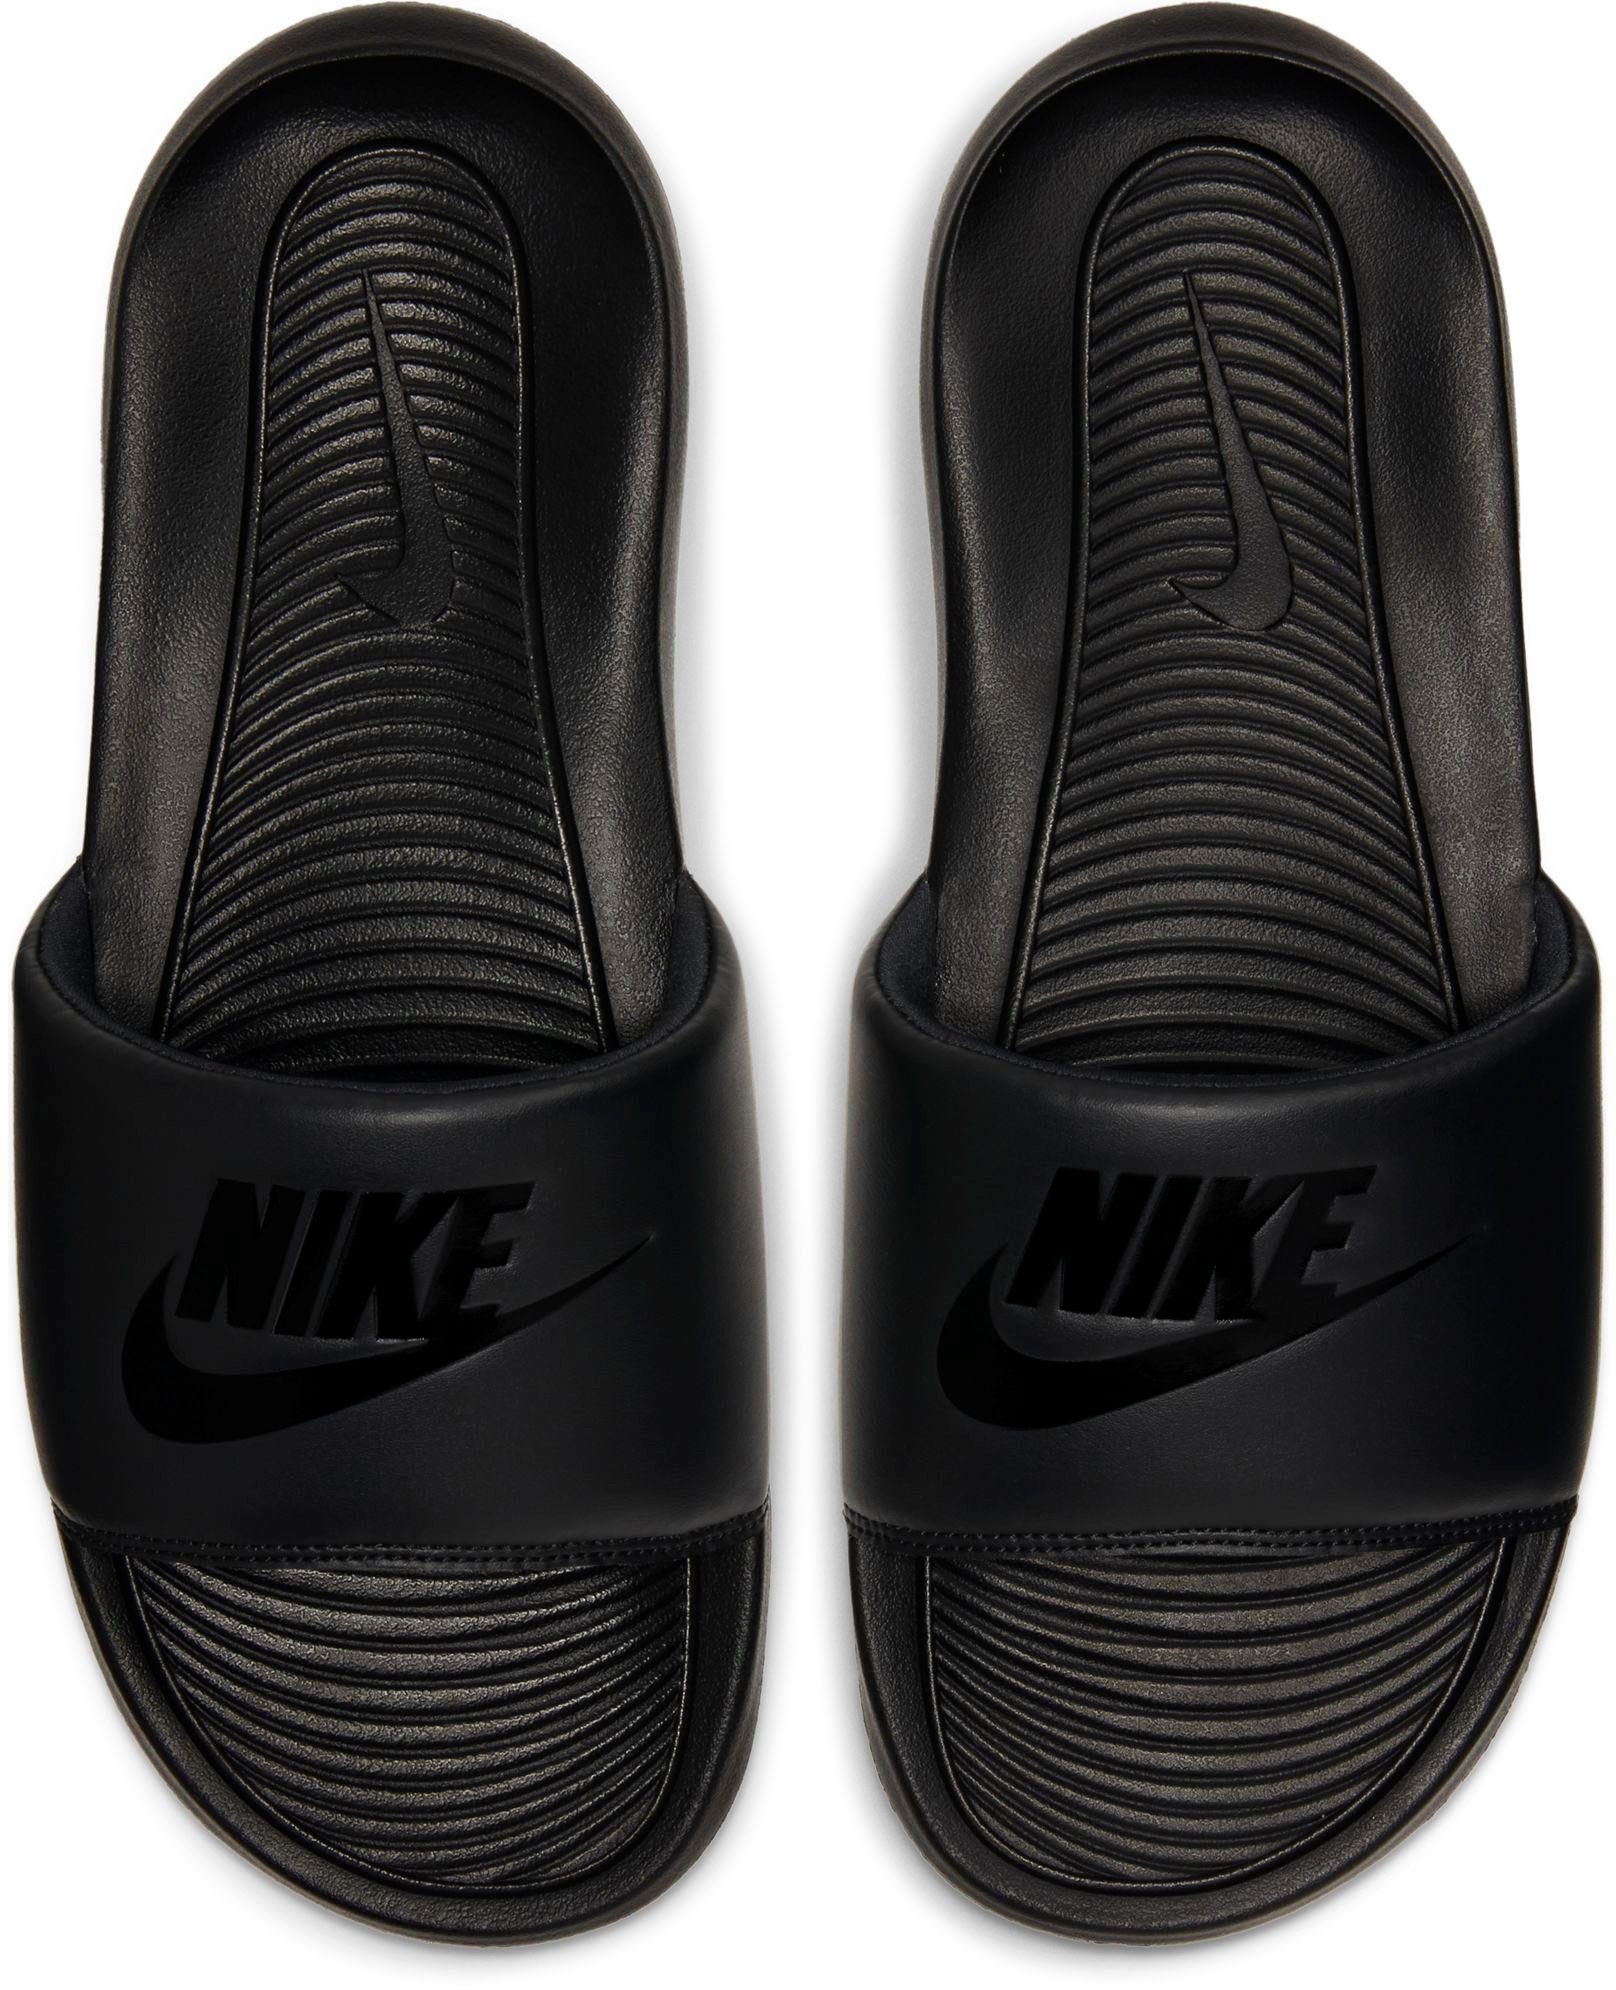 Nike Badeschuhe Herren » Badeschlappen online kaufen | OTTO